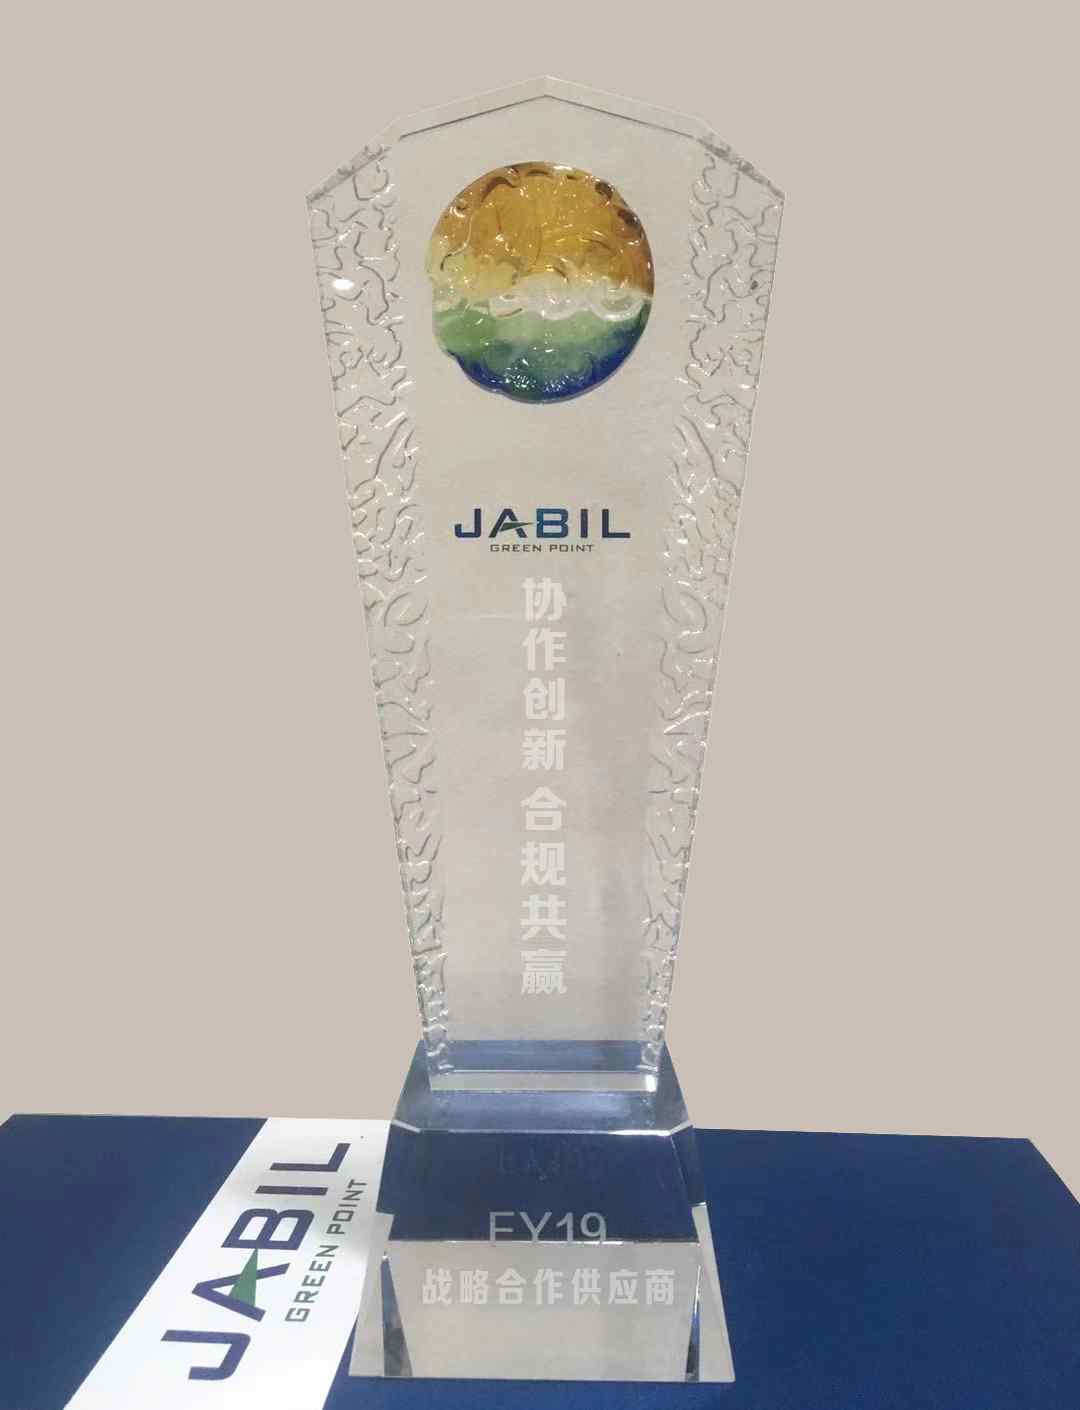 jabil 财富五百强之一的捷普集团（JABIL） 授予世强战略合作供应商称号